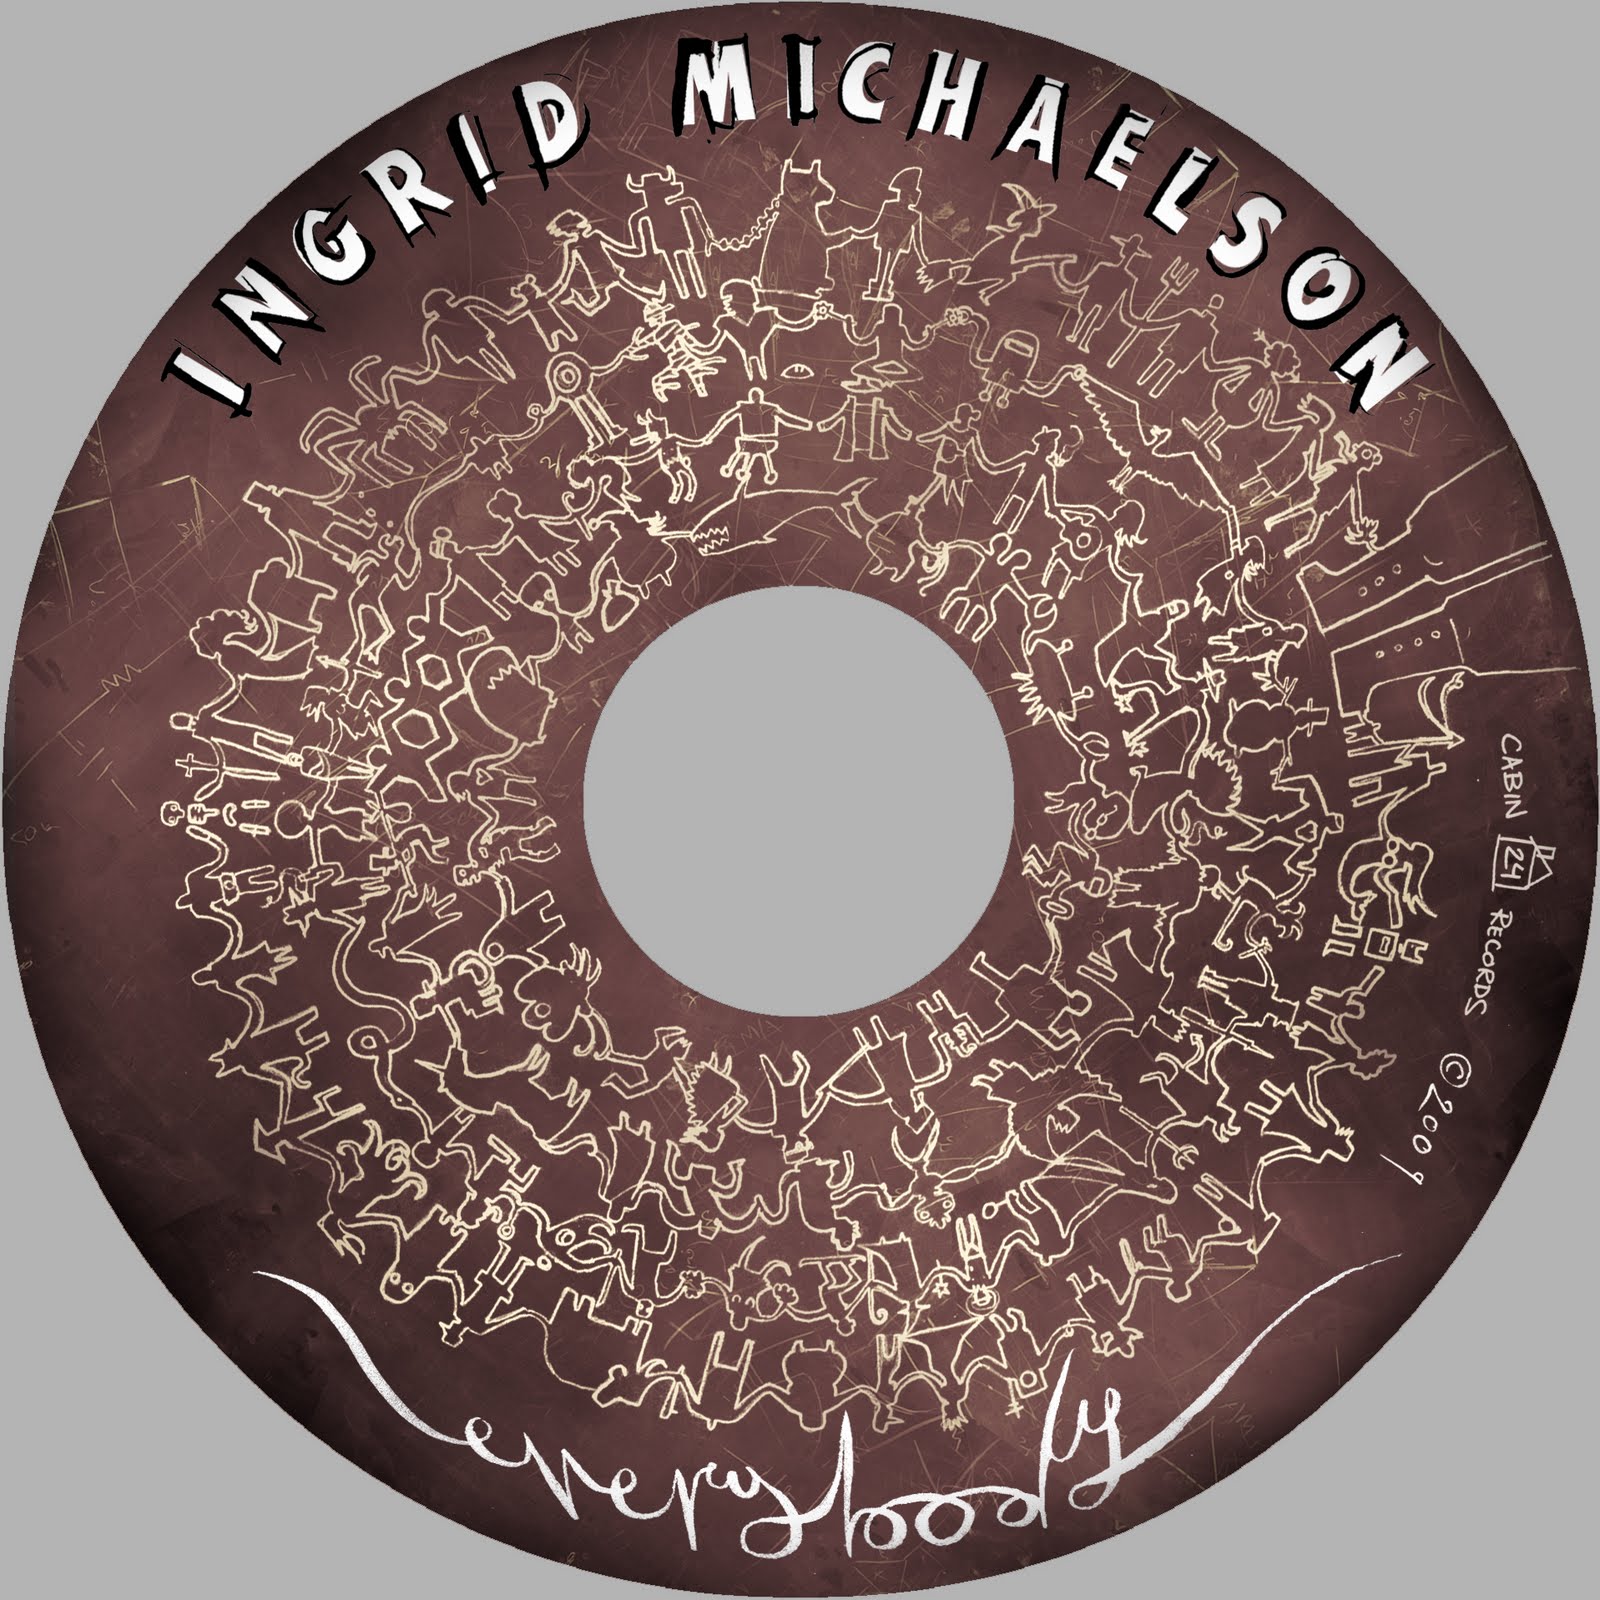 Everybody+ingrid+michaelson+album